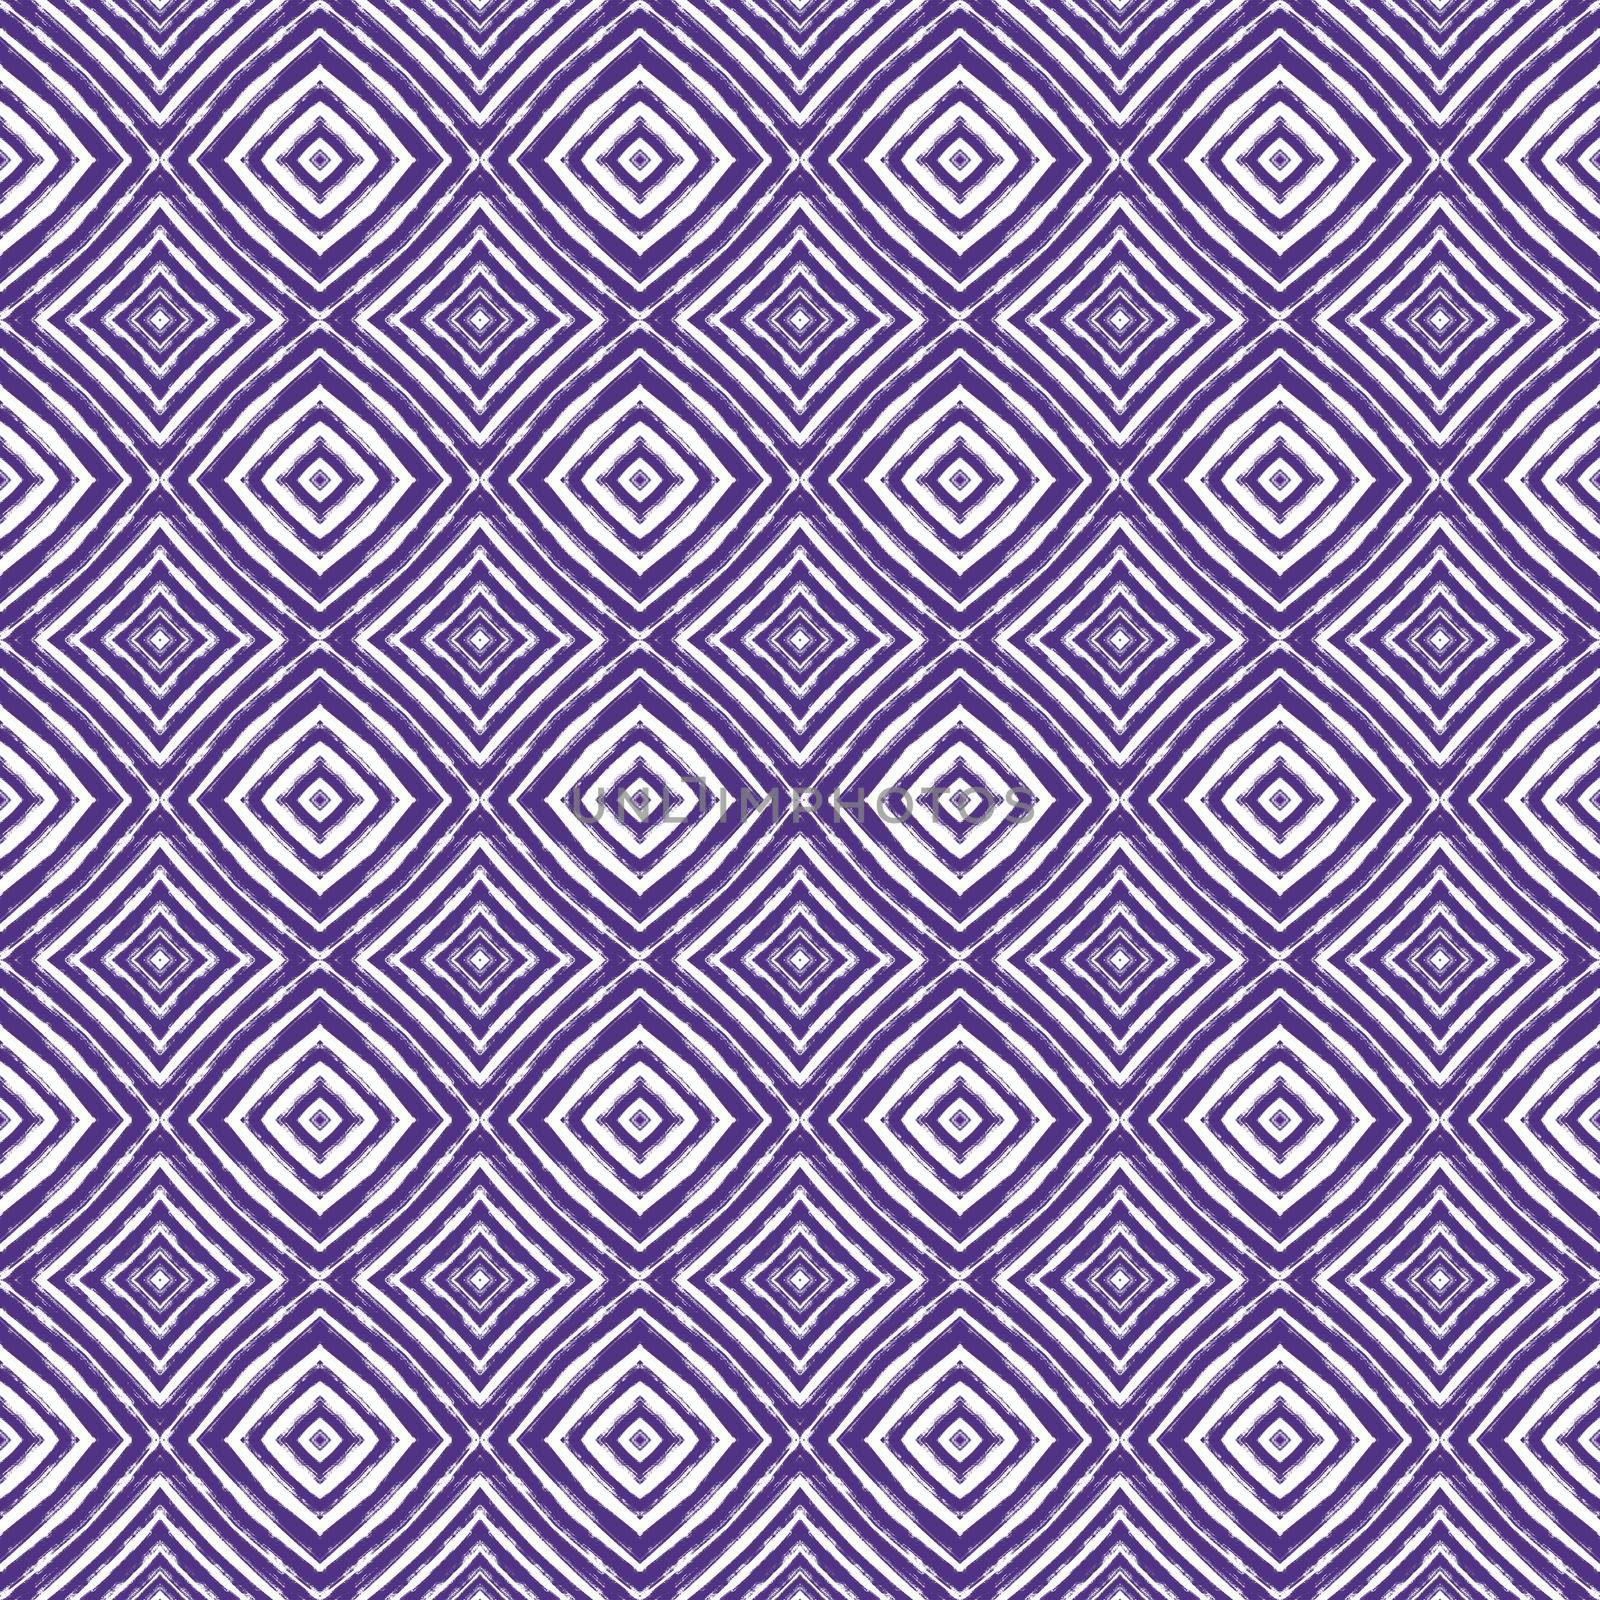 Textured stripes pattern. Purple symmetrical by beginagain